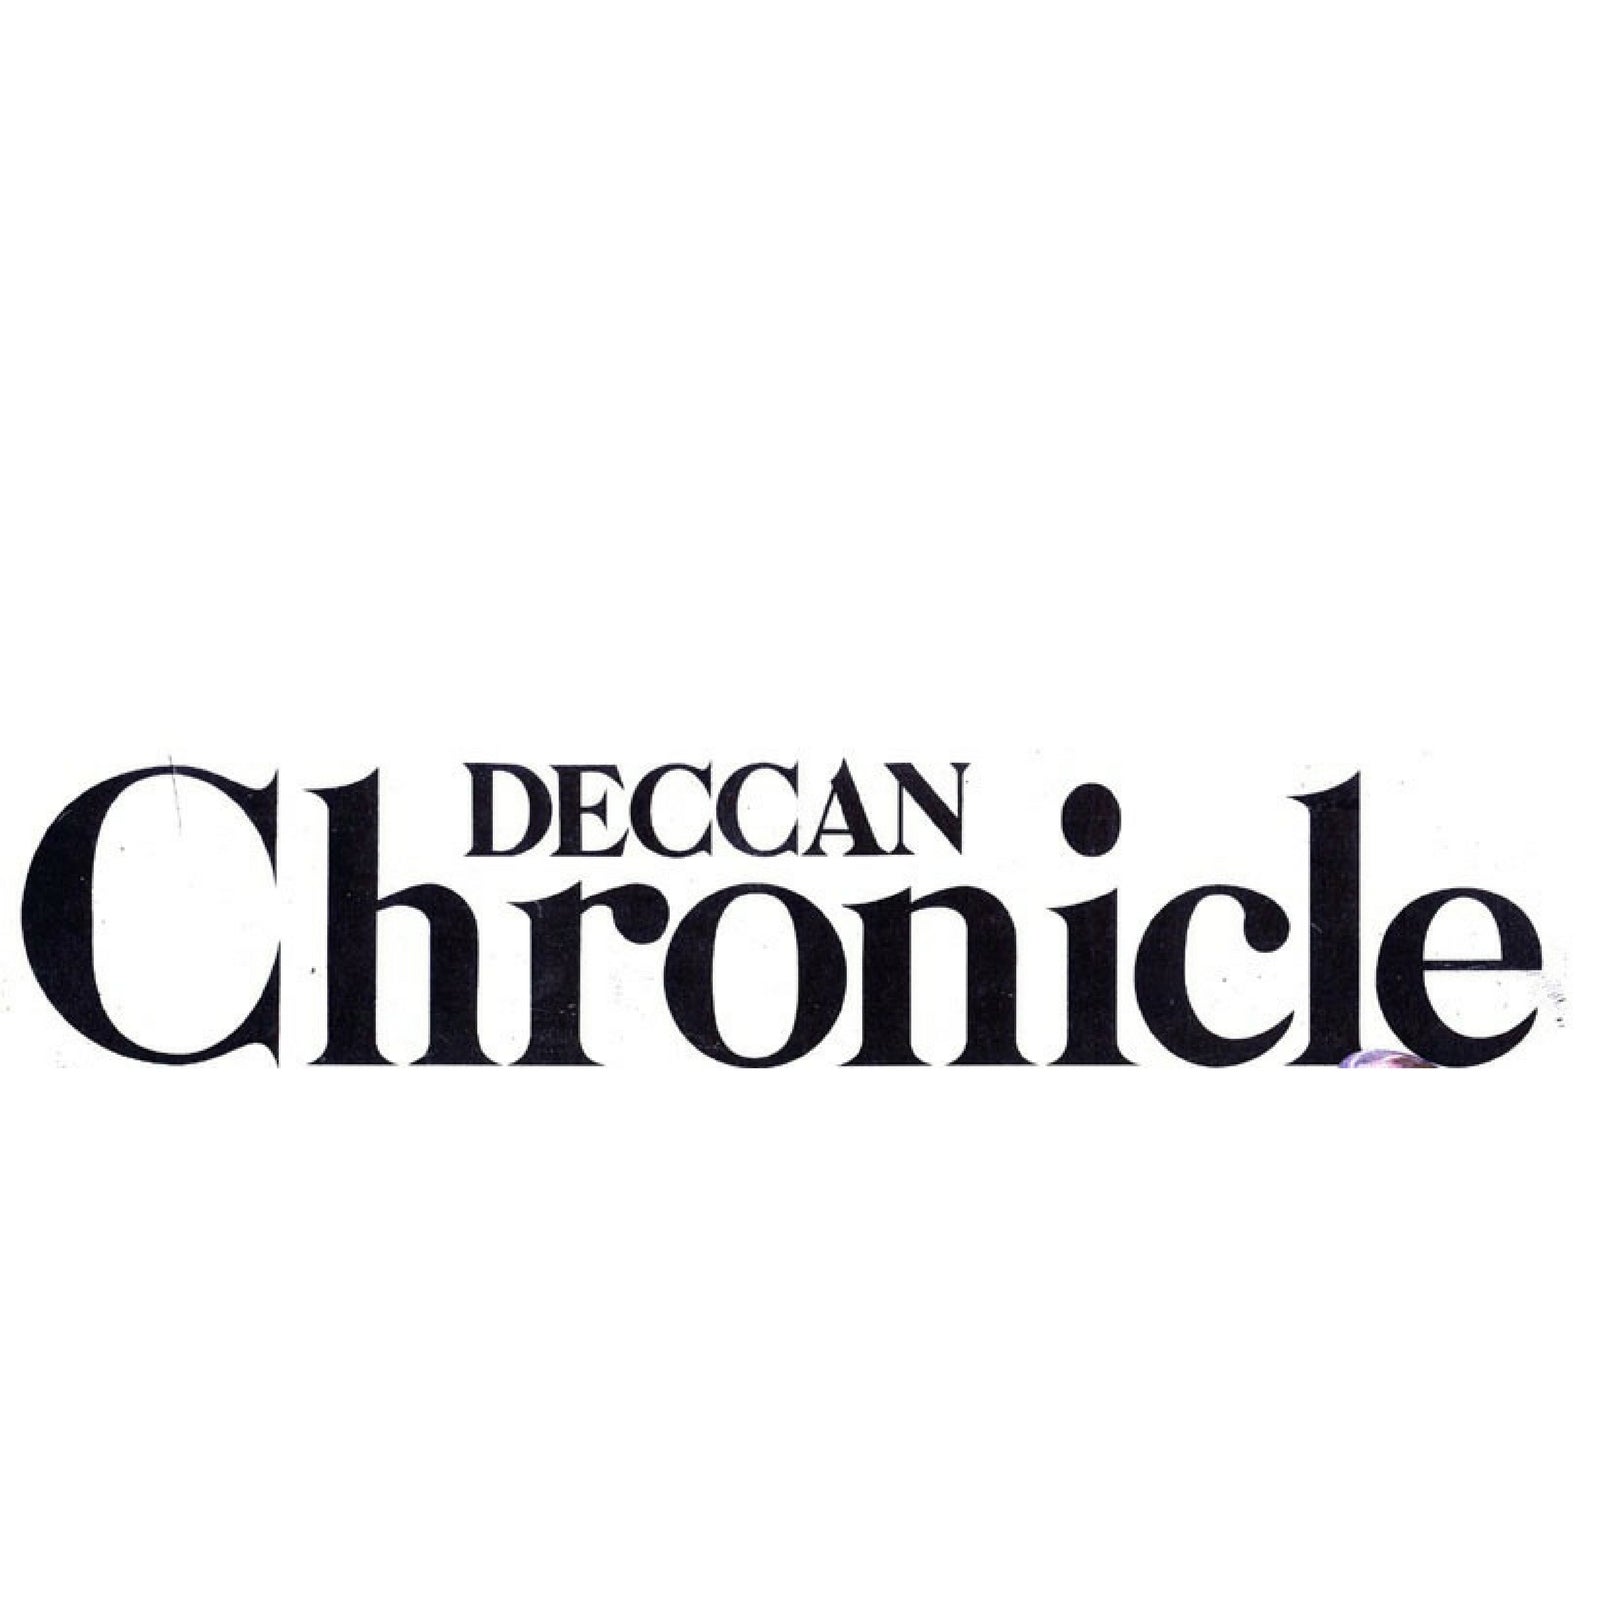 Deccan Chronicle